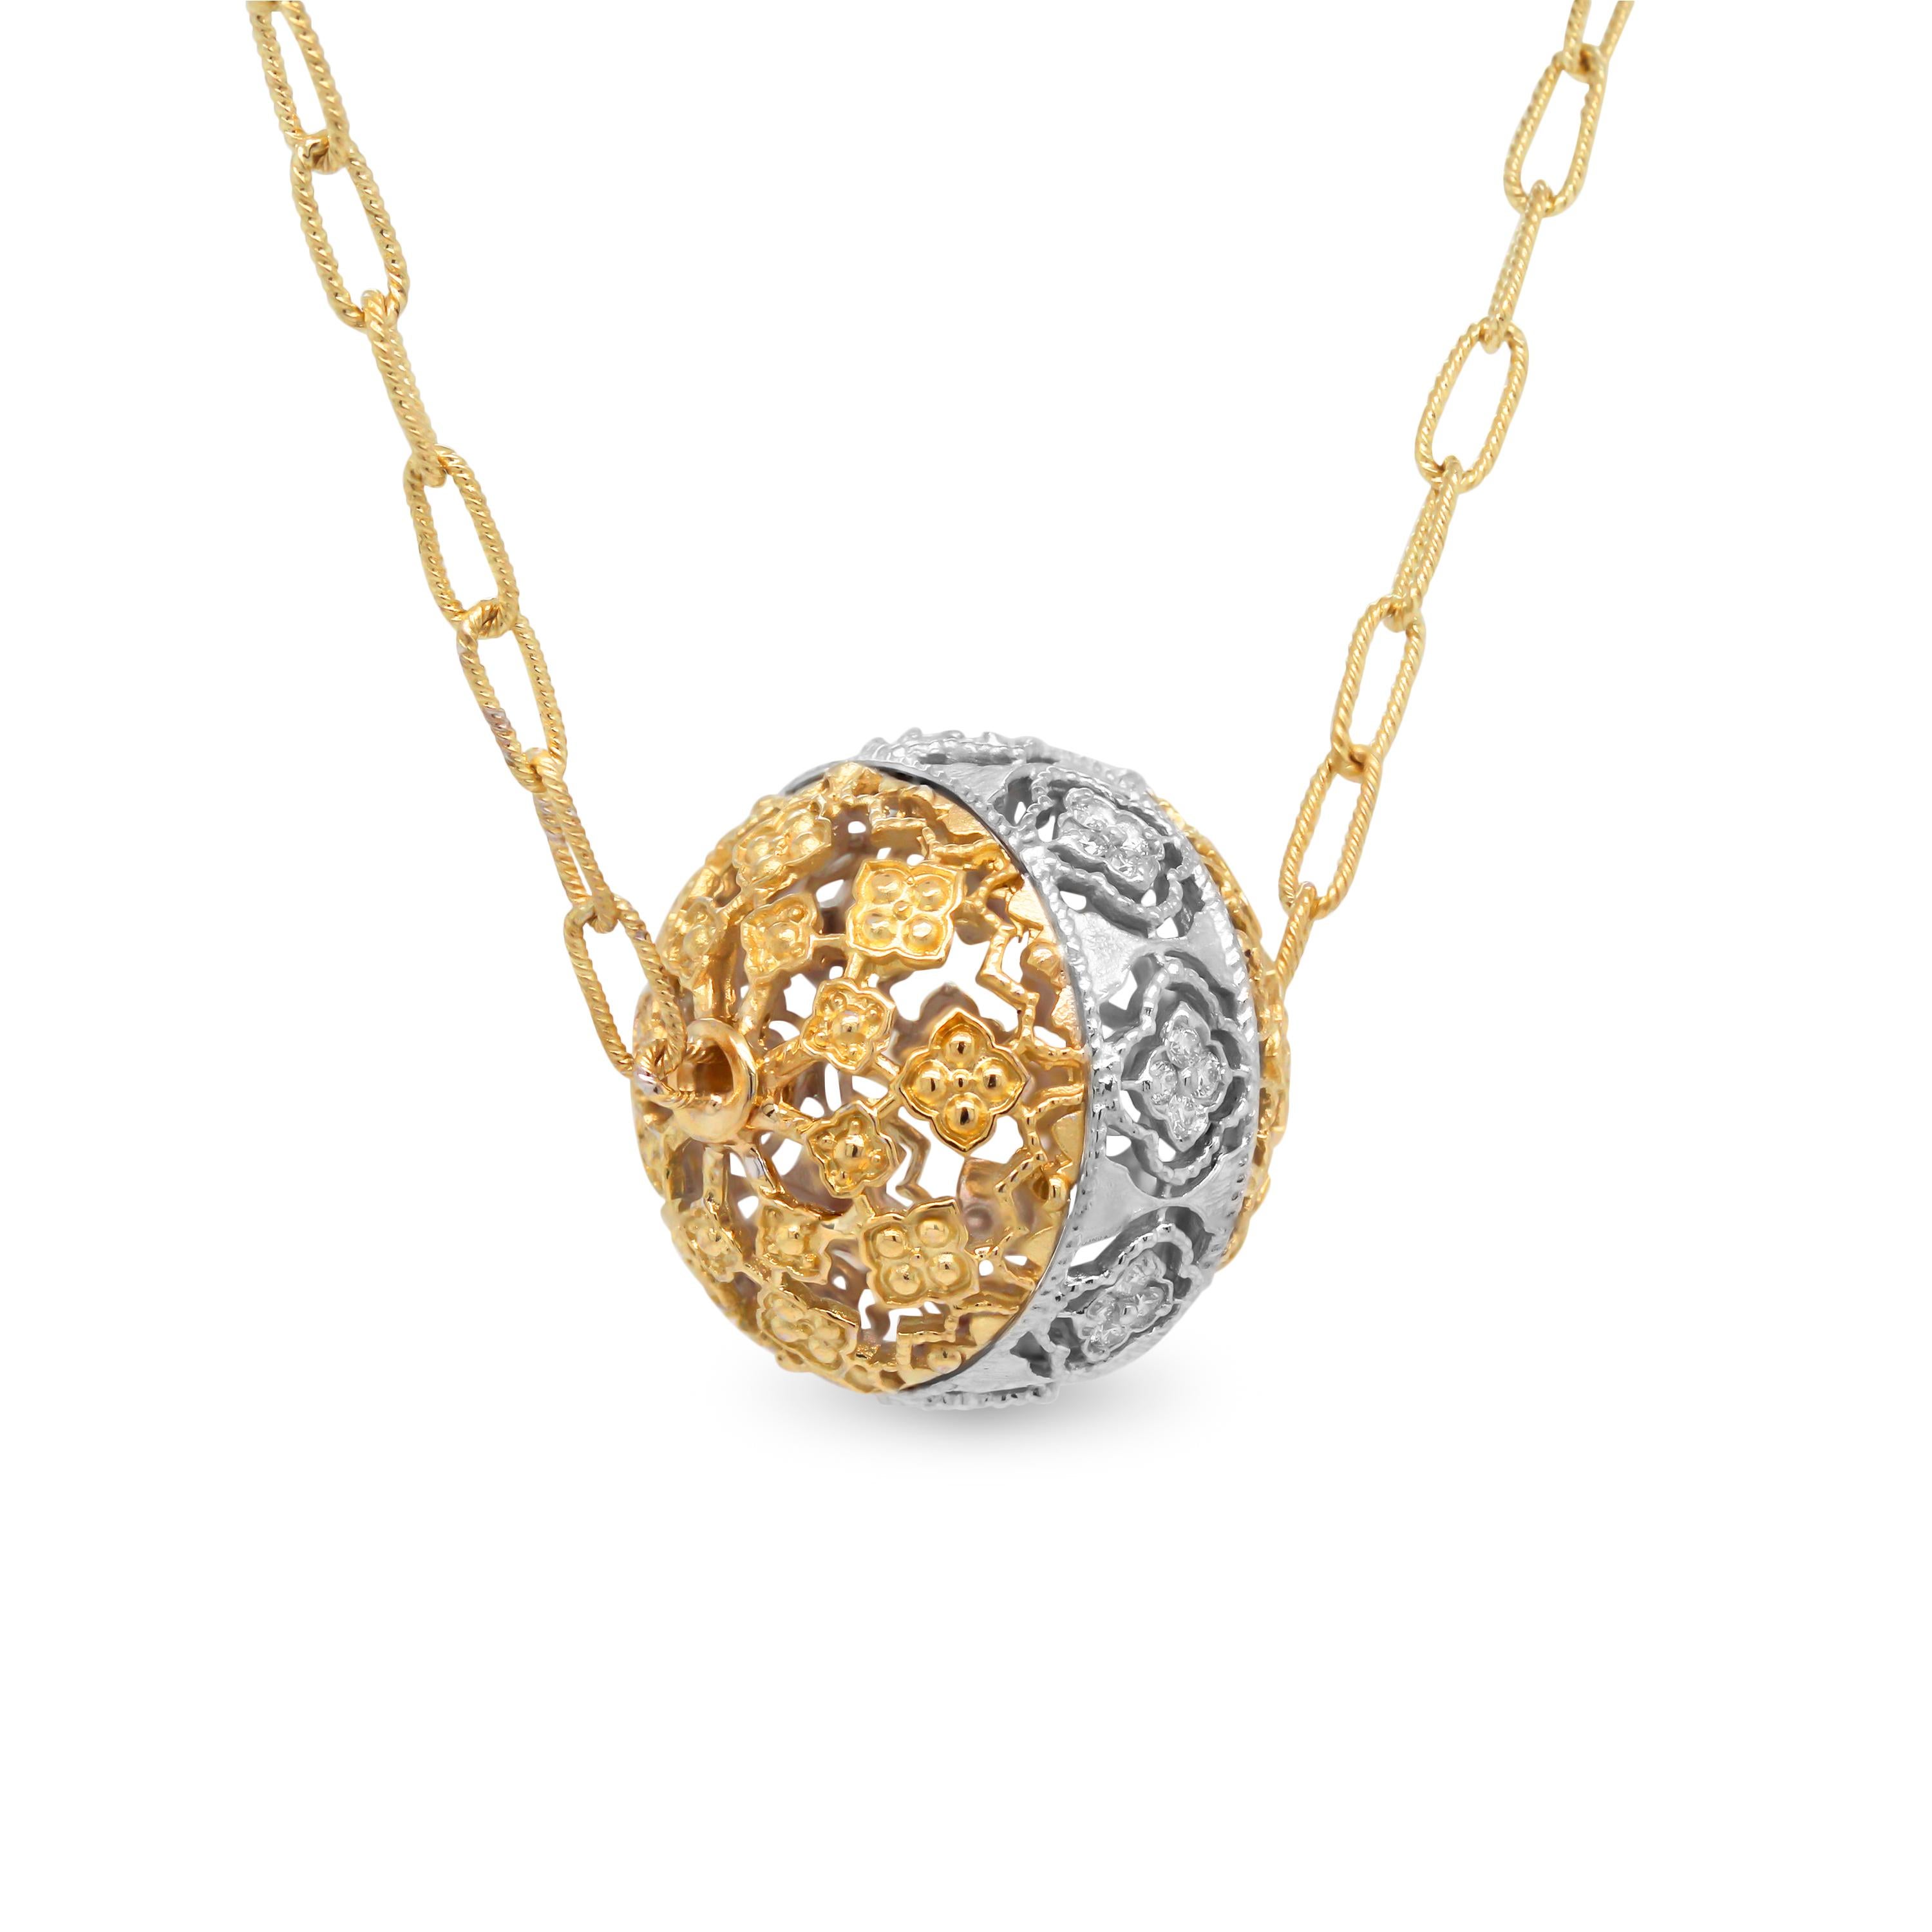 Stambolian 18K Yellow White Gold Diamond All Around Ball Pendant Chain Necklace

This gorgeous pendant from the Stambolian 